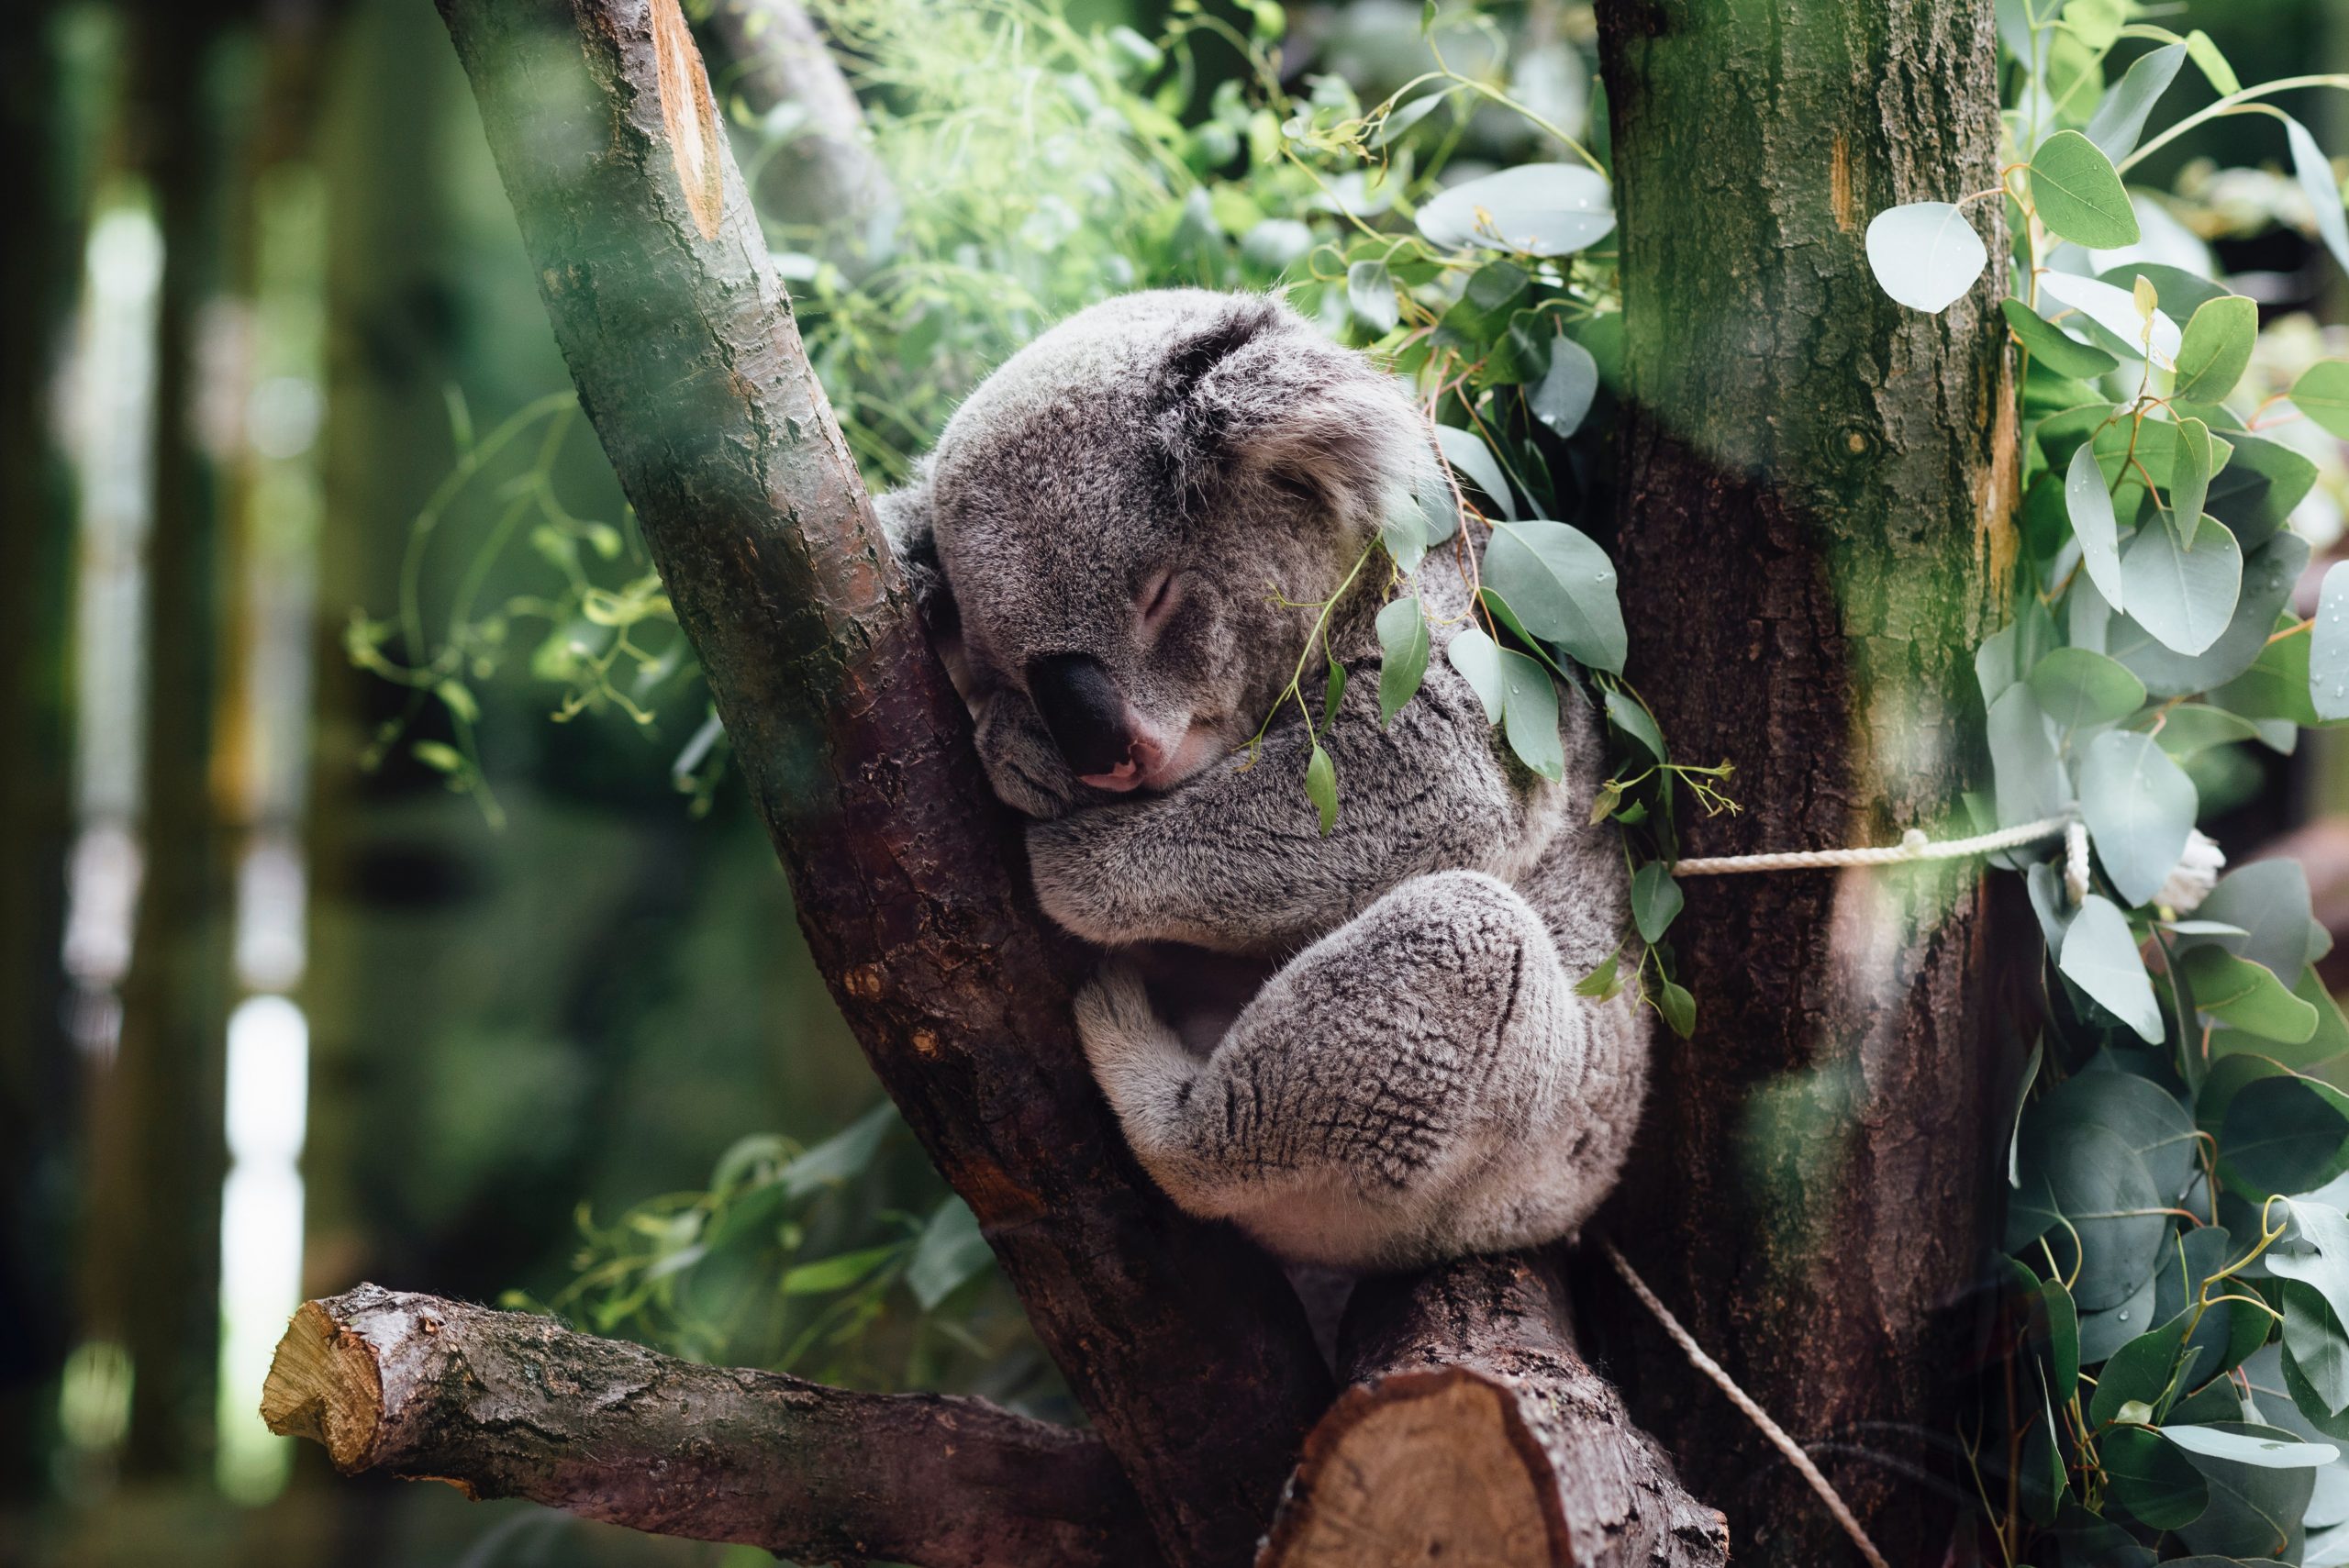 Pay a visit to Jirrahlinga Koala and Wildlife Sanctuary